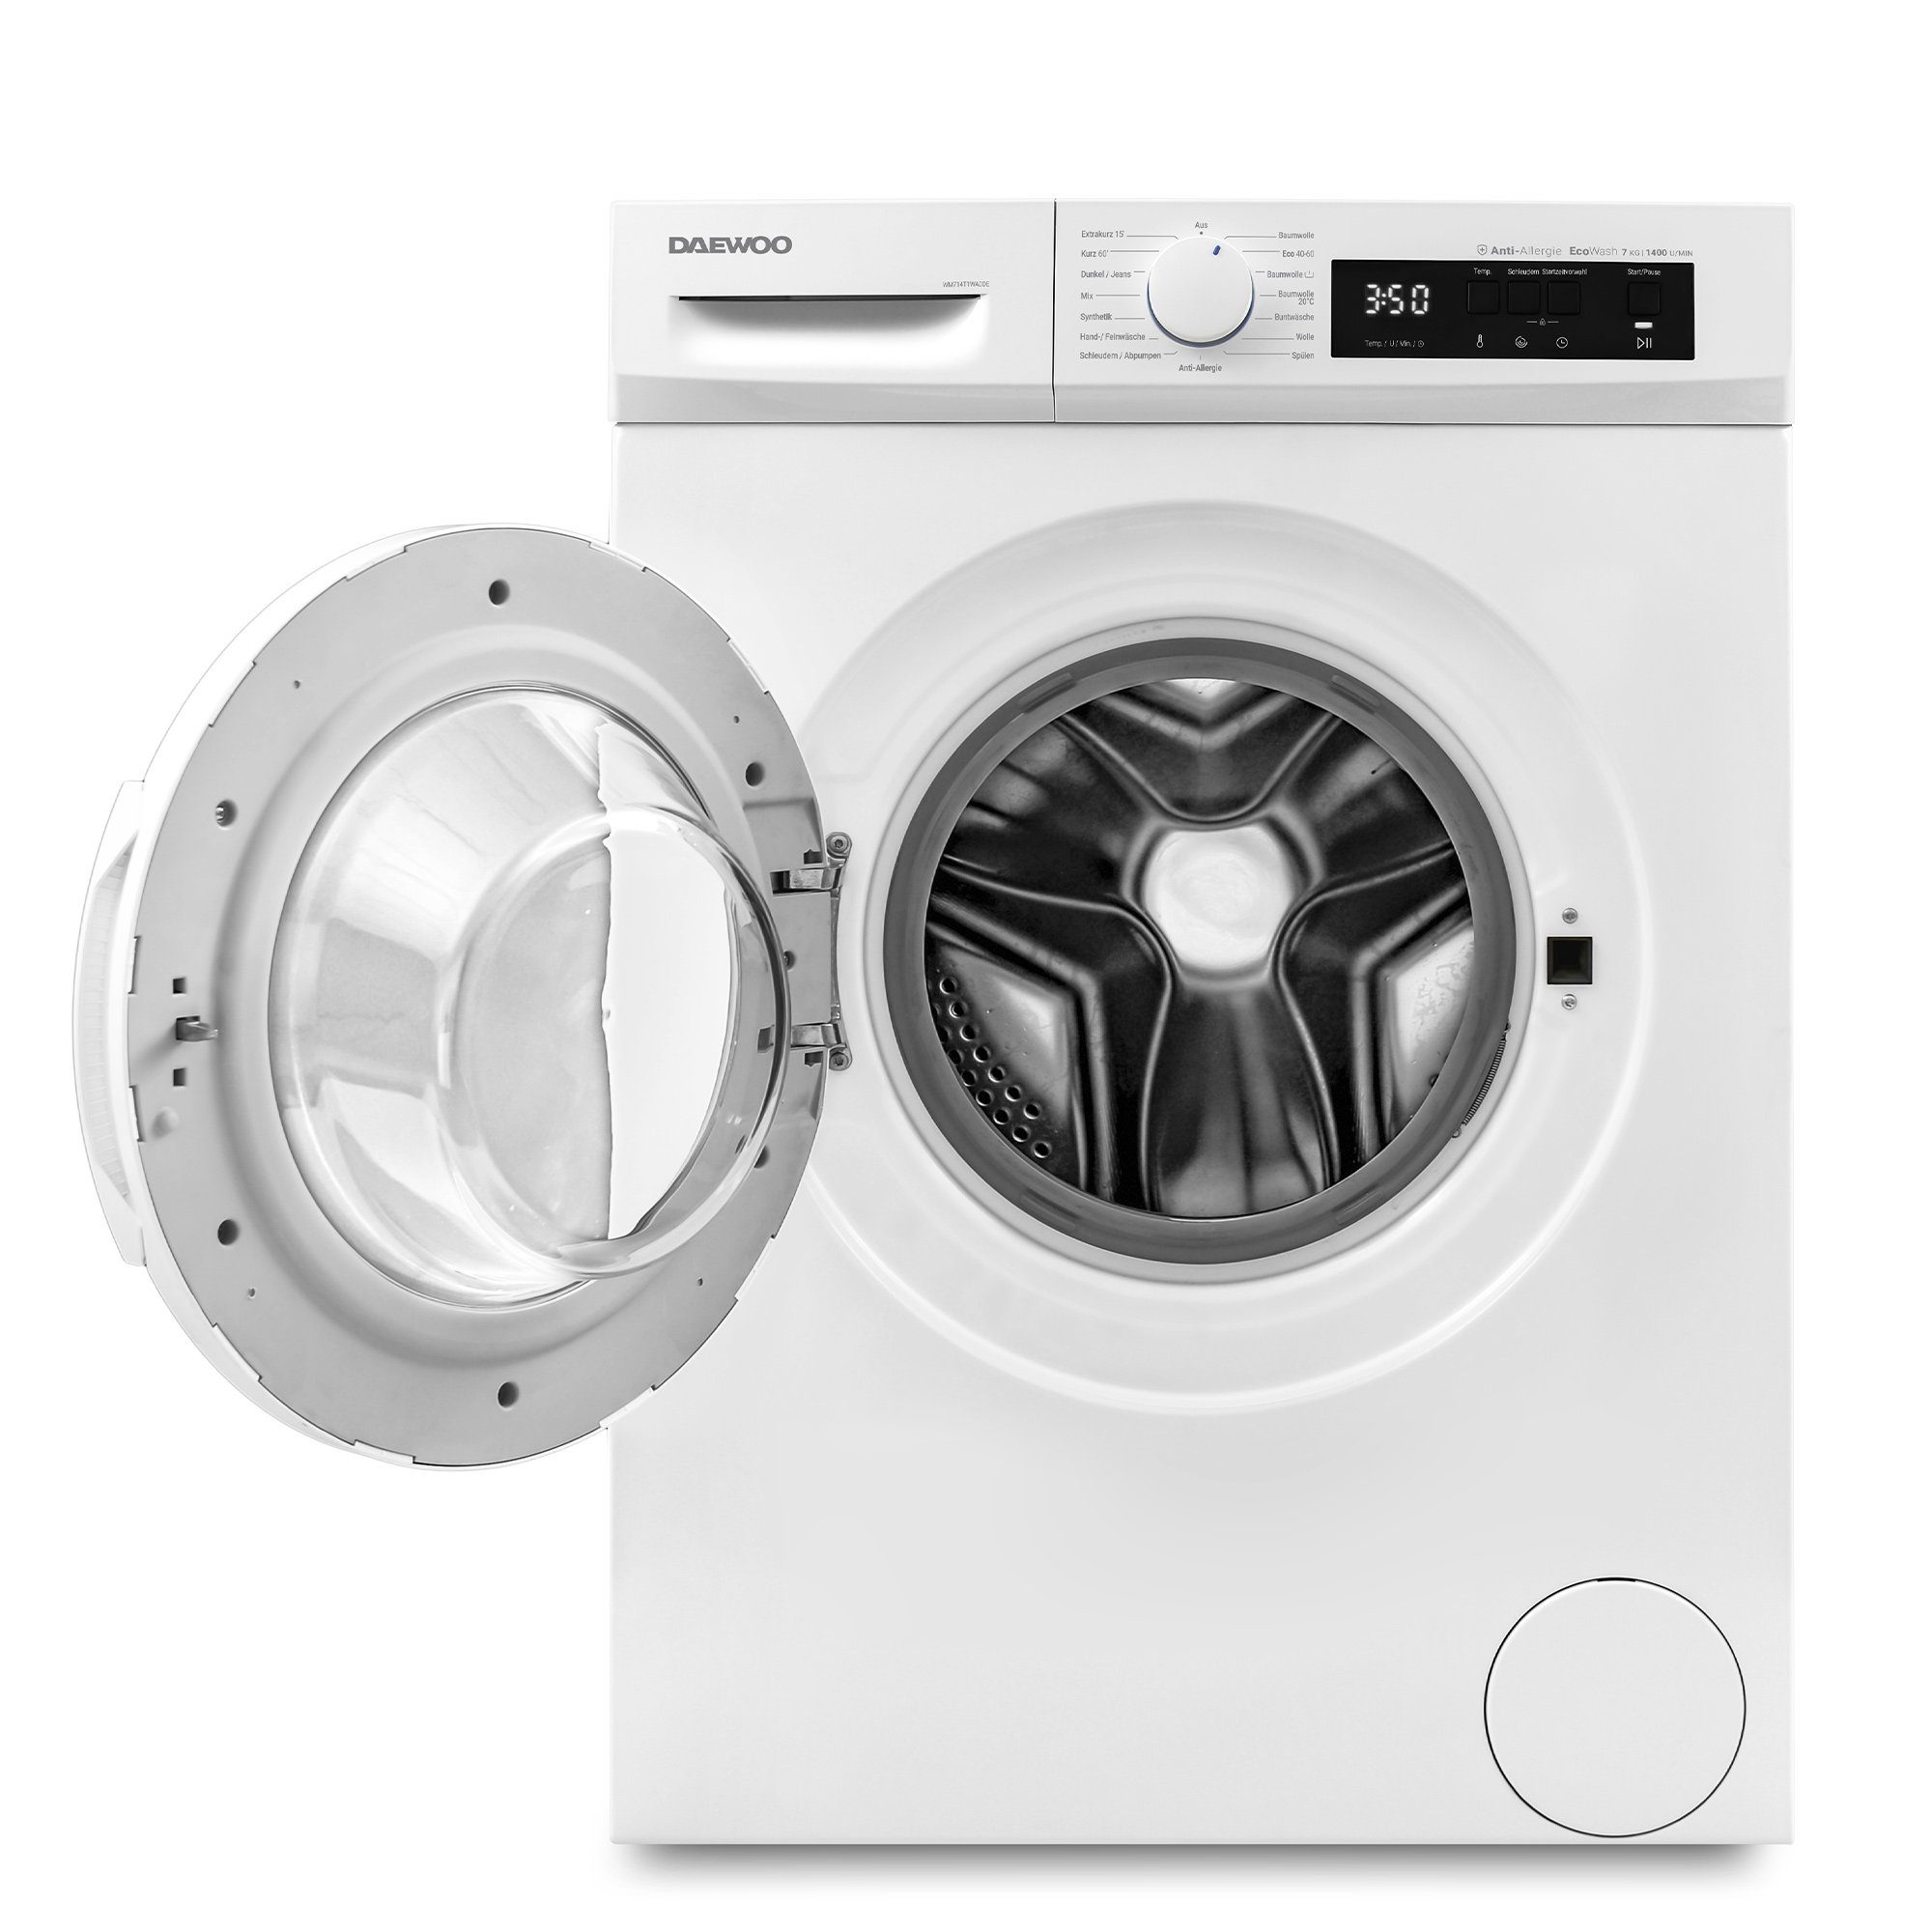 Daewoo 1400 Waschmaschine Temperaturwahl 7,00 kg, U/min, Variable WM714T1WA0DE,